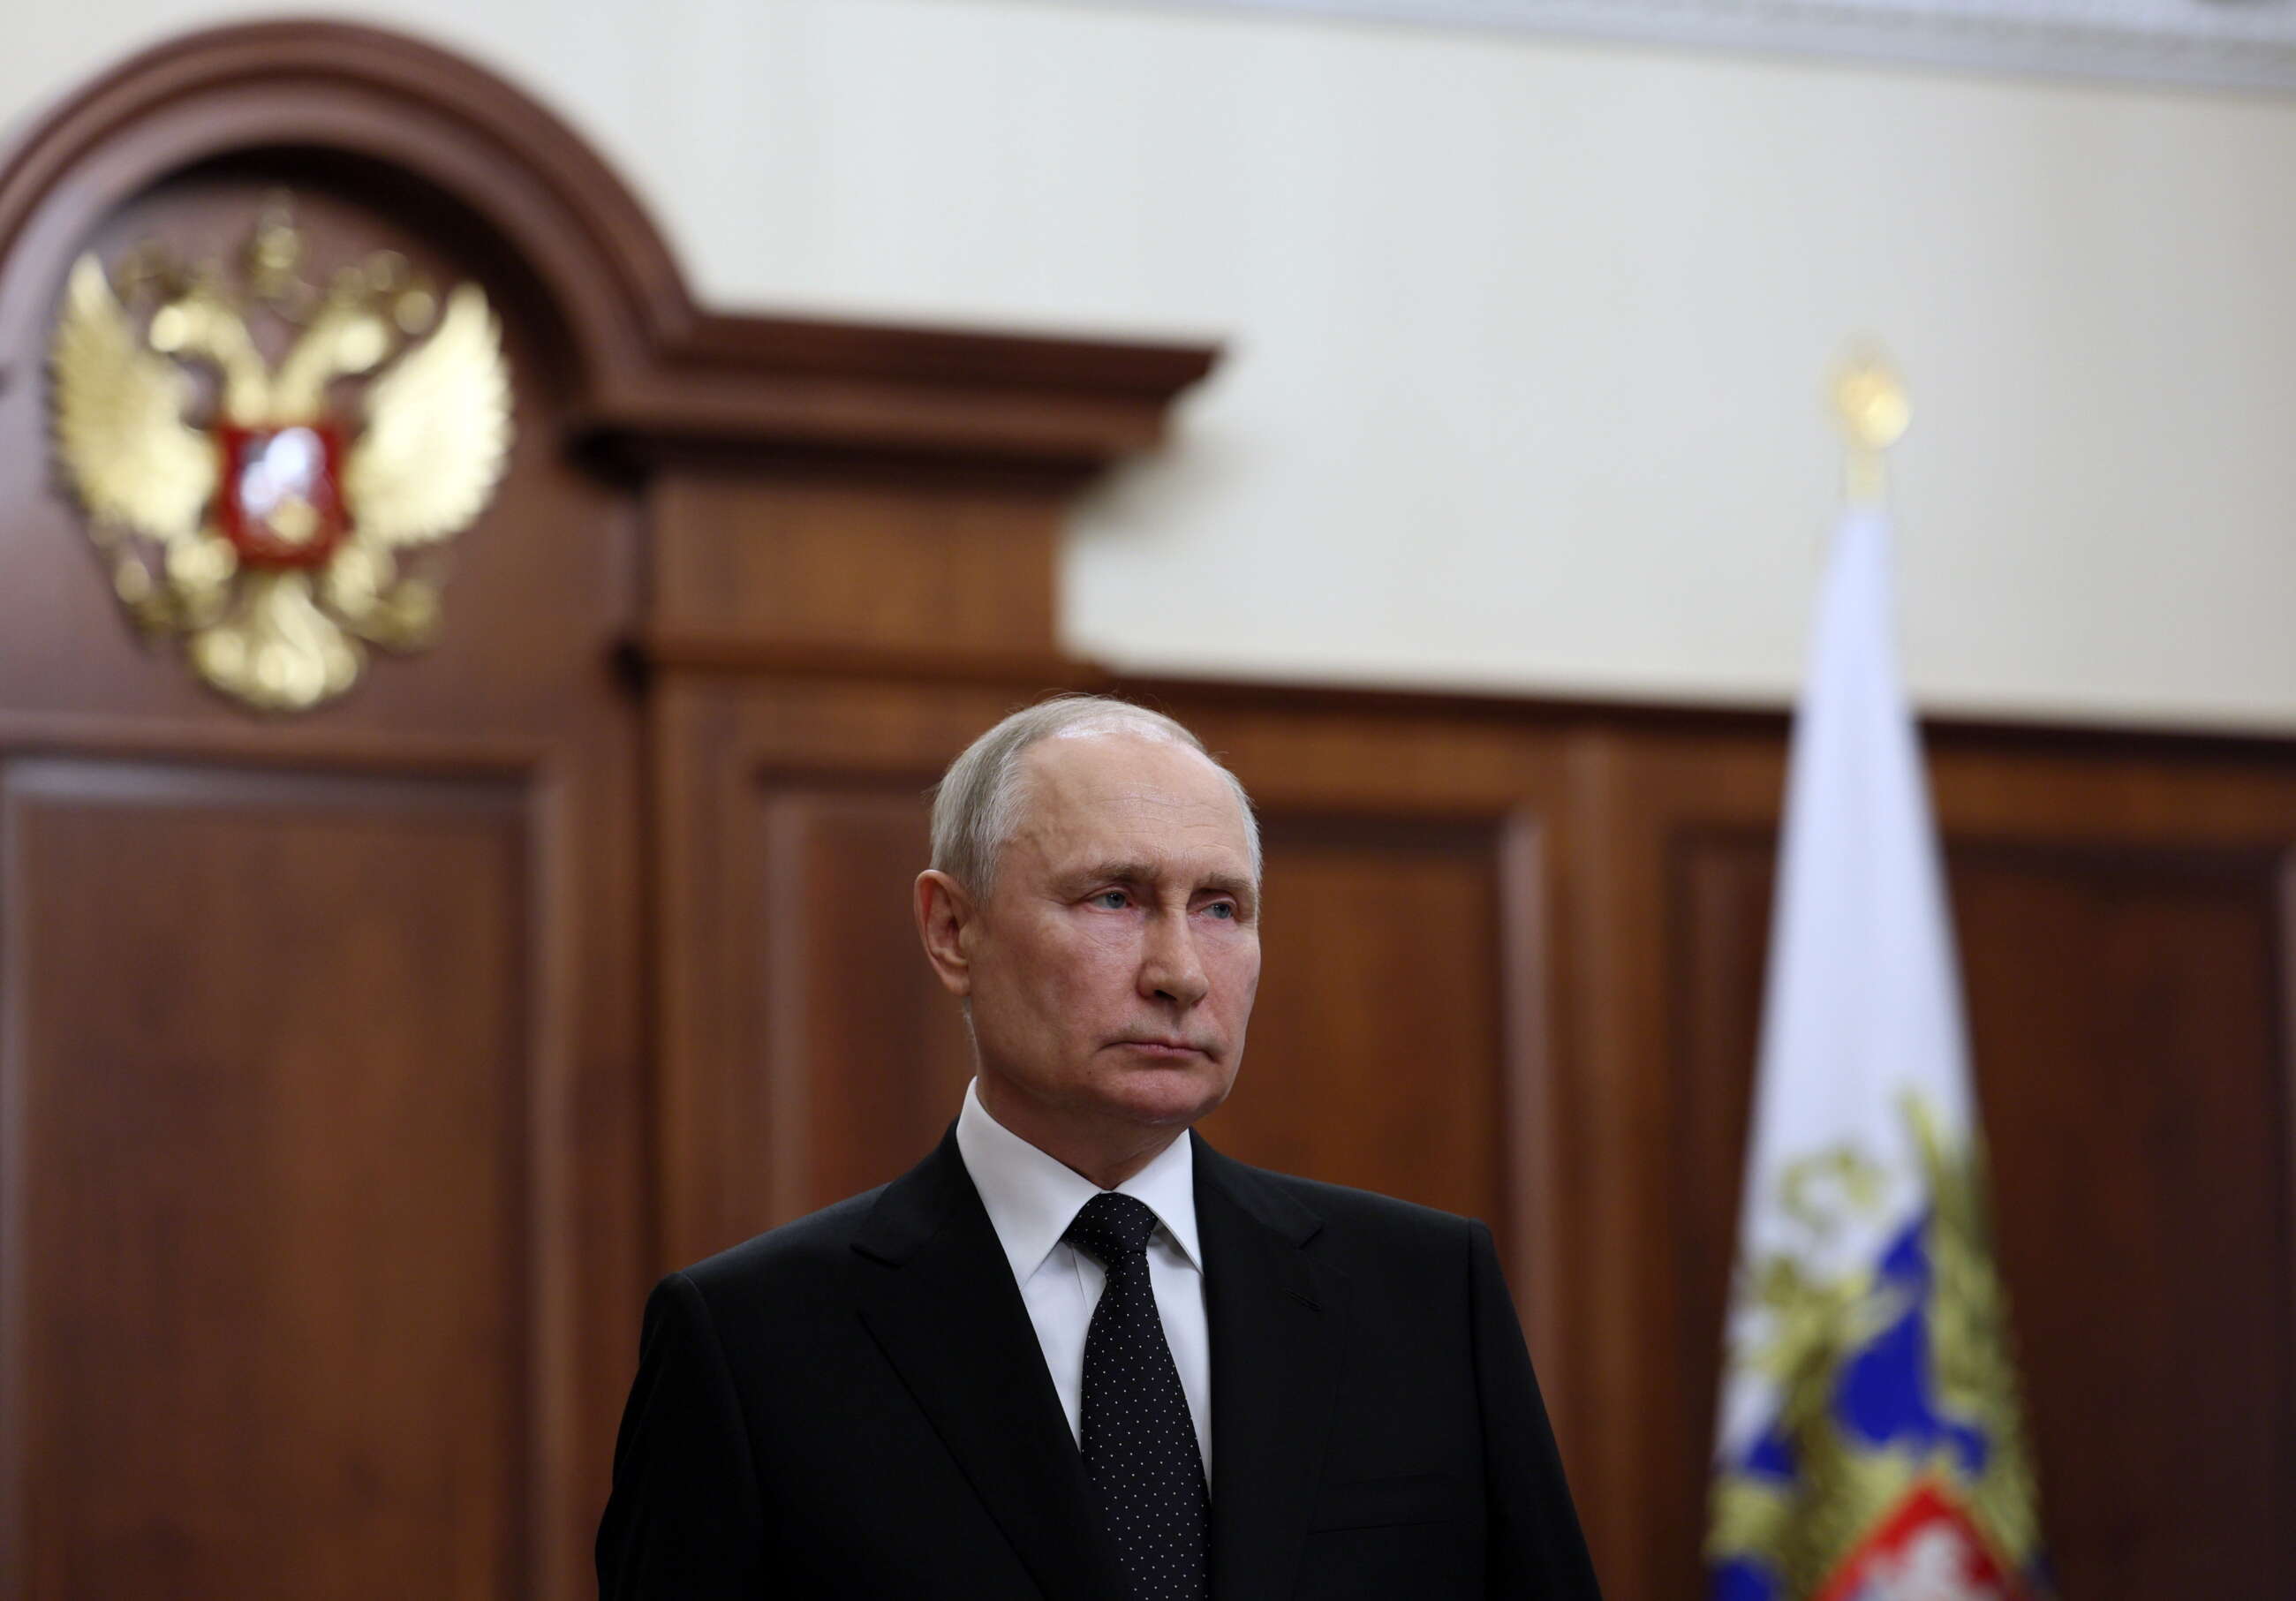 El presidente de Rusia, Vladimir Putin. EFE/EPA/GAVRIIL GRIGOROV/SPUTNIK/KREMLIN POOL MANDATORY CREDIT